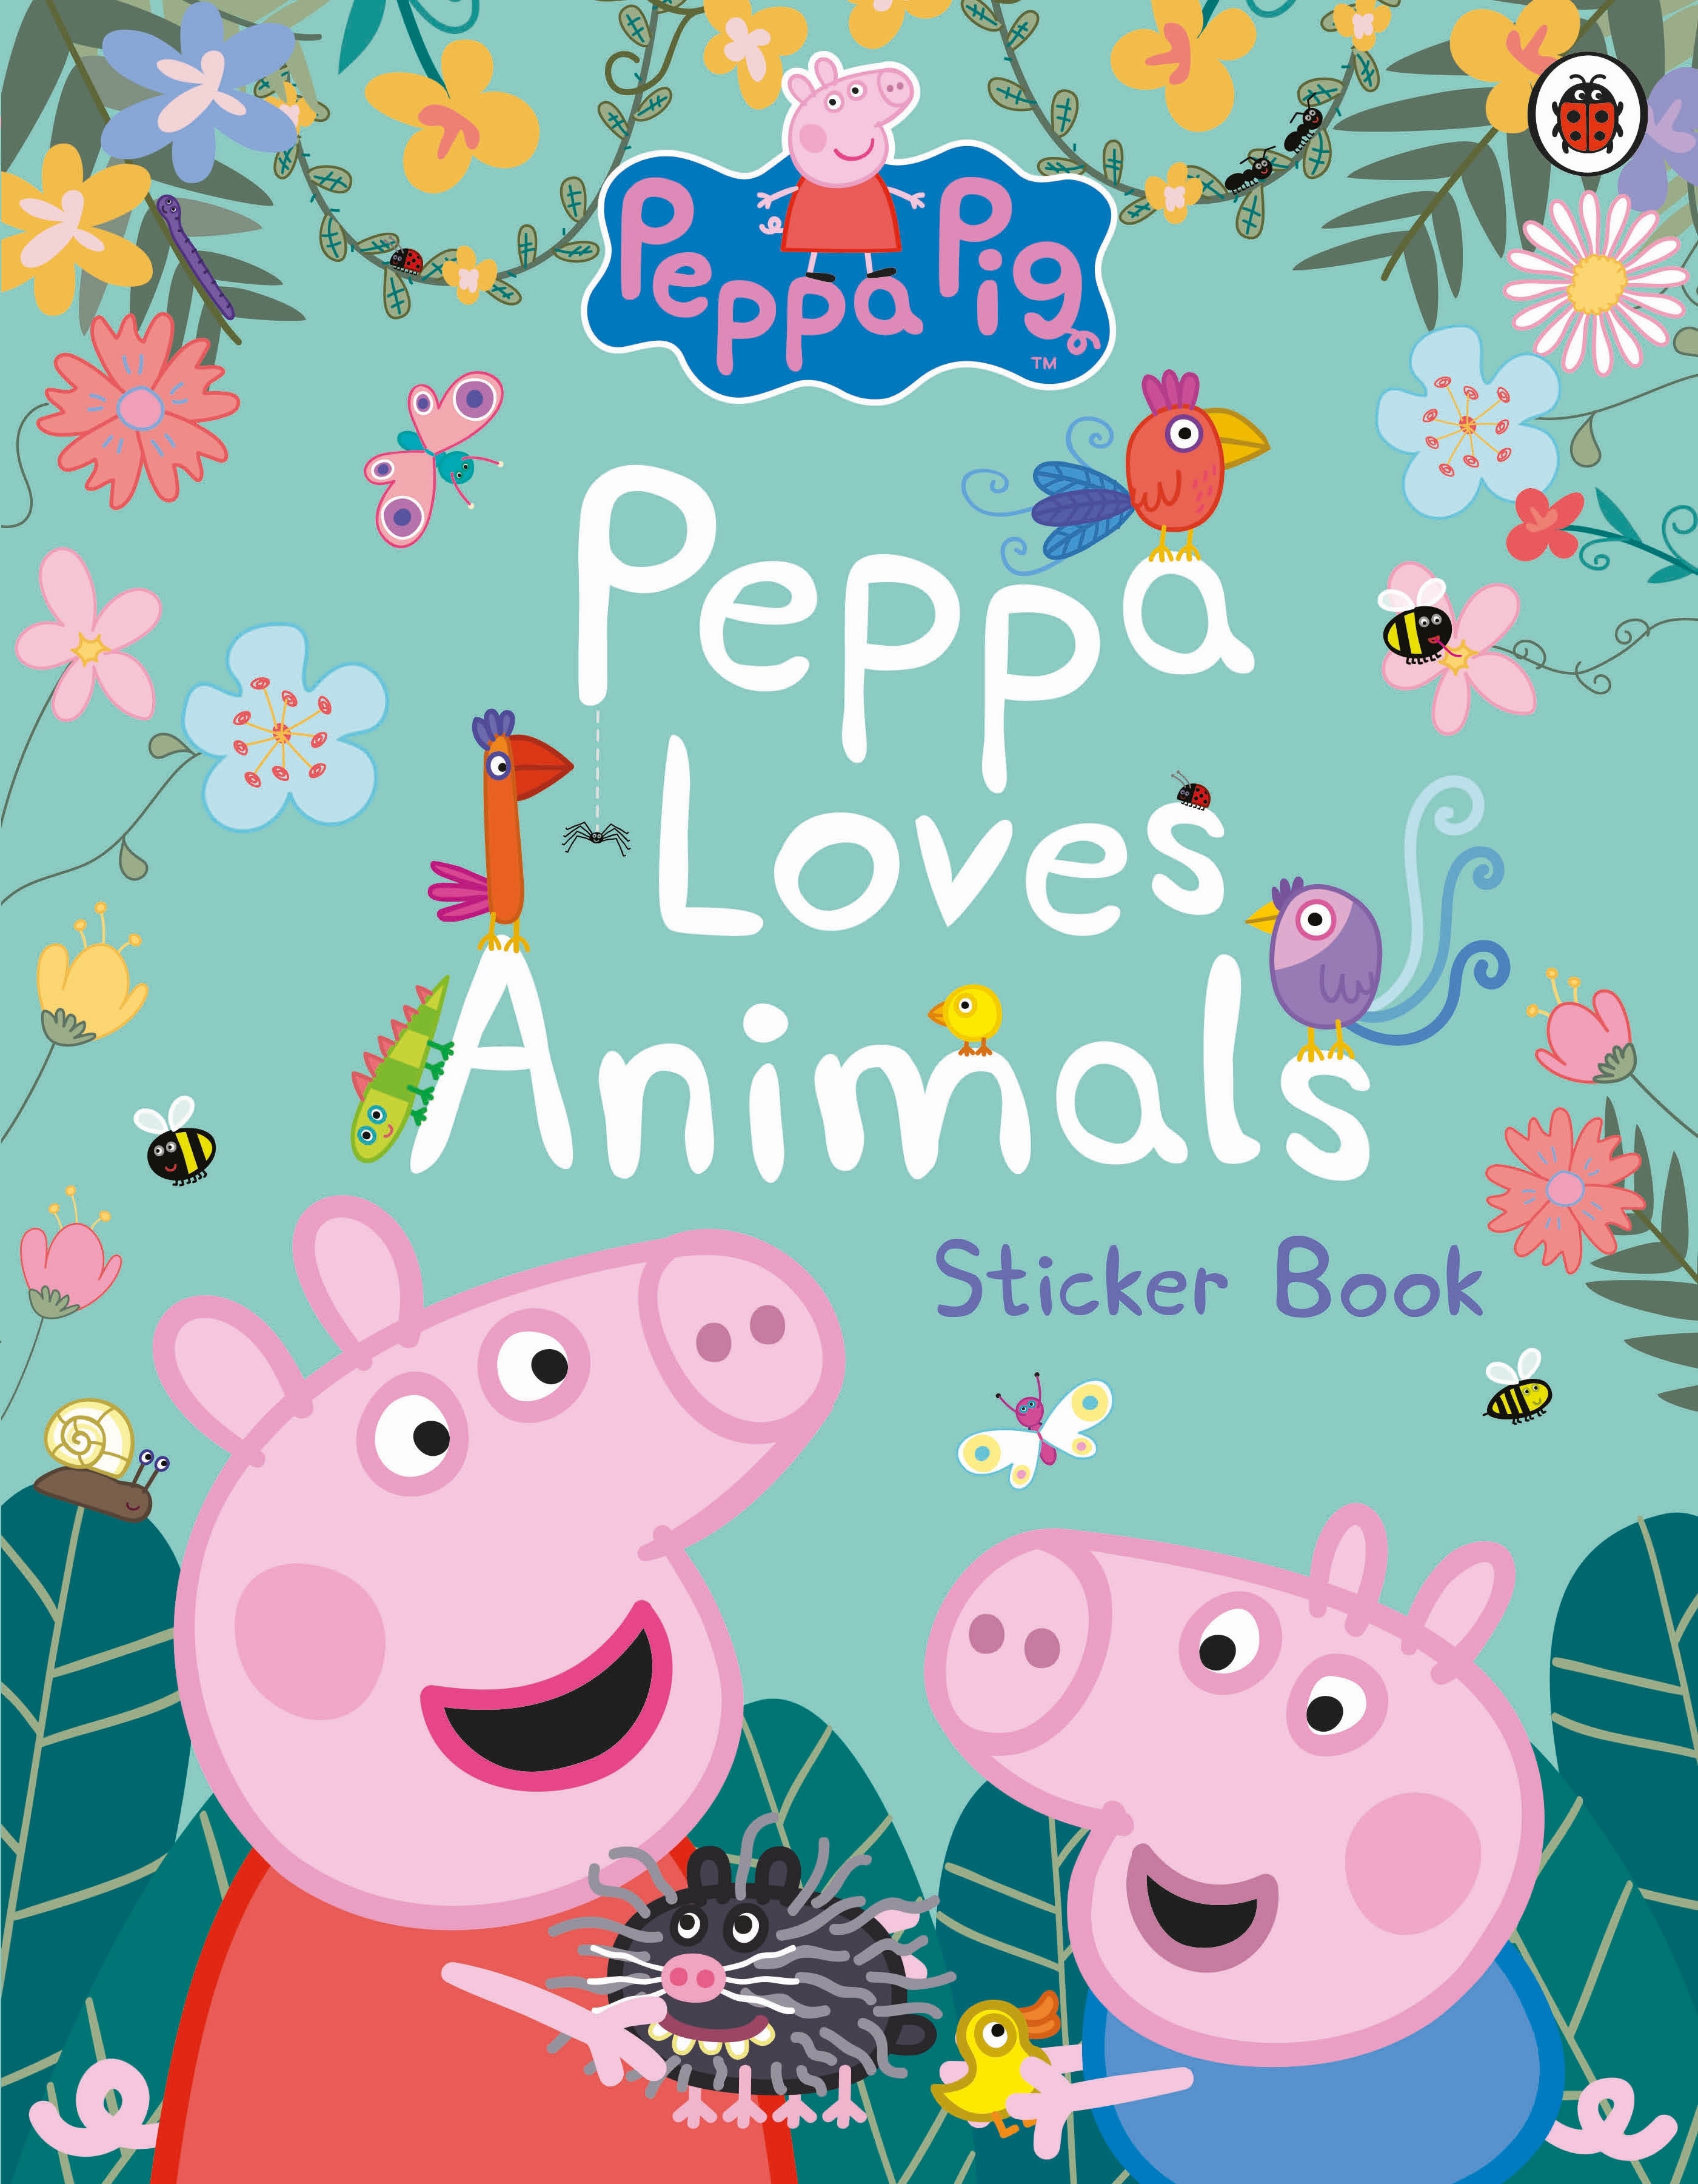 Book “Peppa Pig: Peppa Loves Animals” by Peppa Pig — January 7, 2021